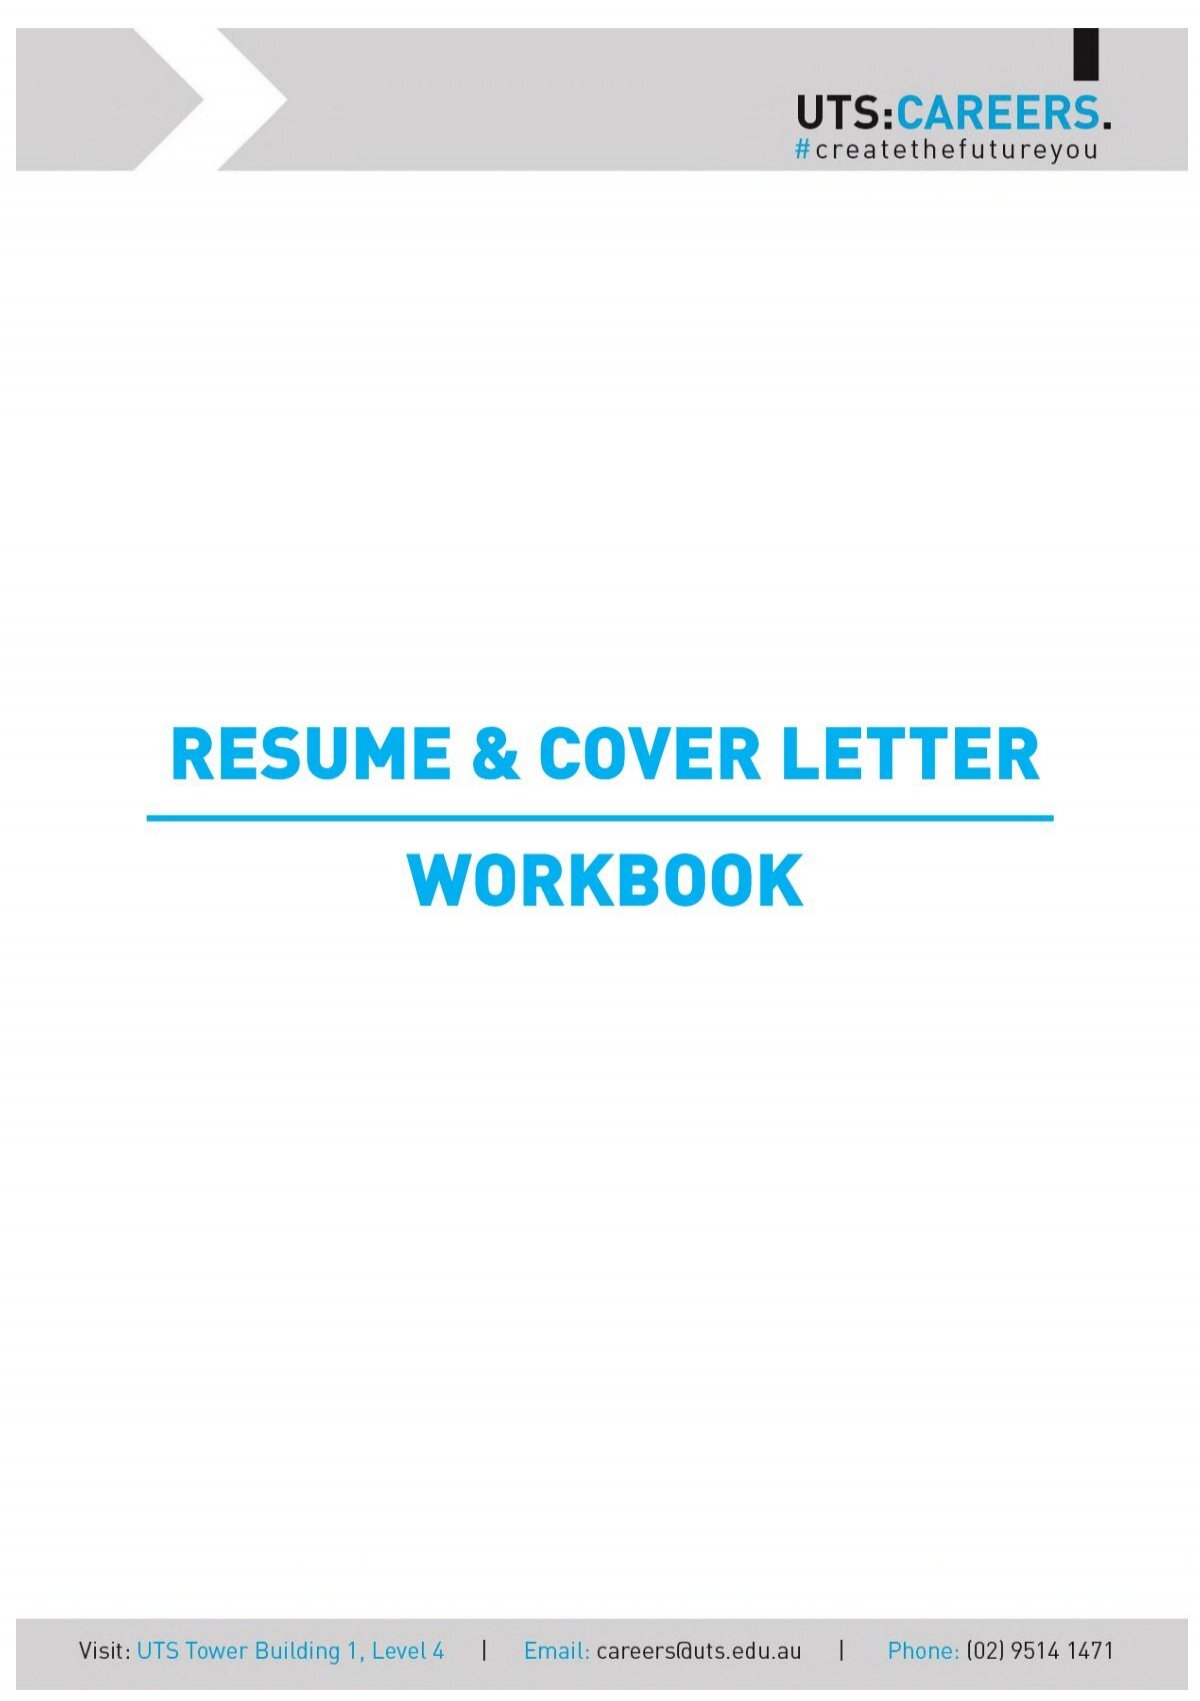 resume-cover-letter-workbook